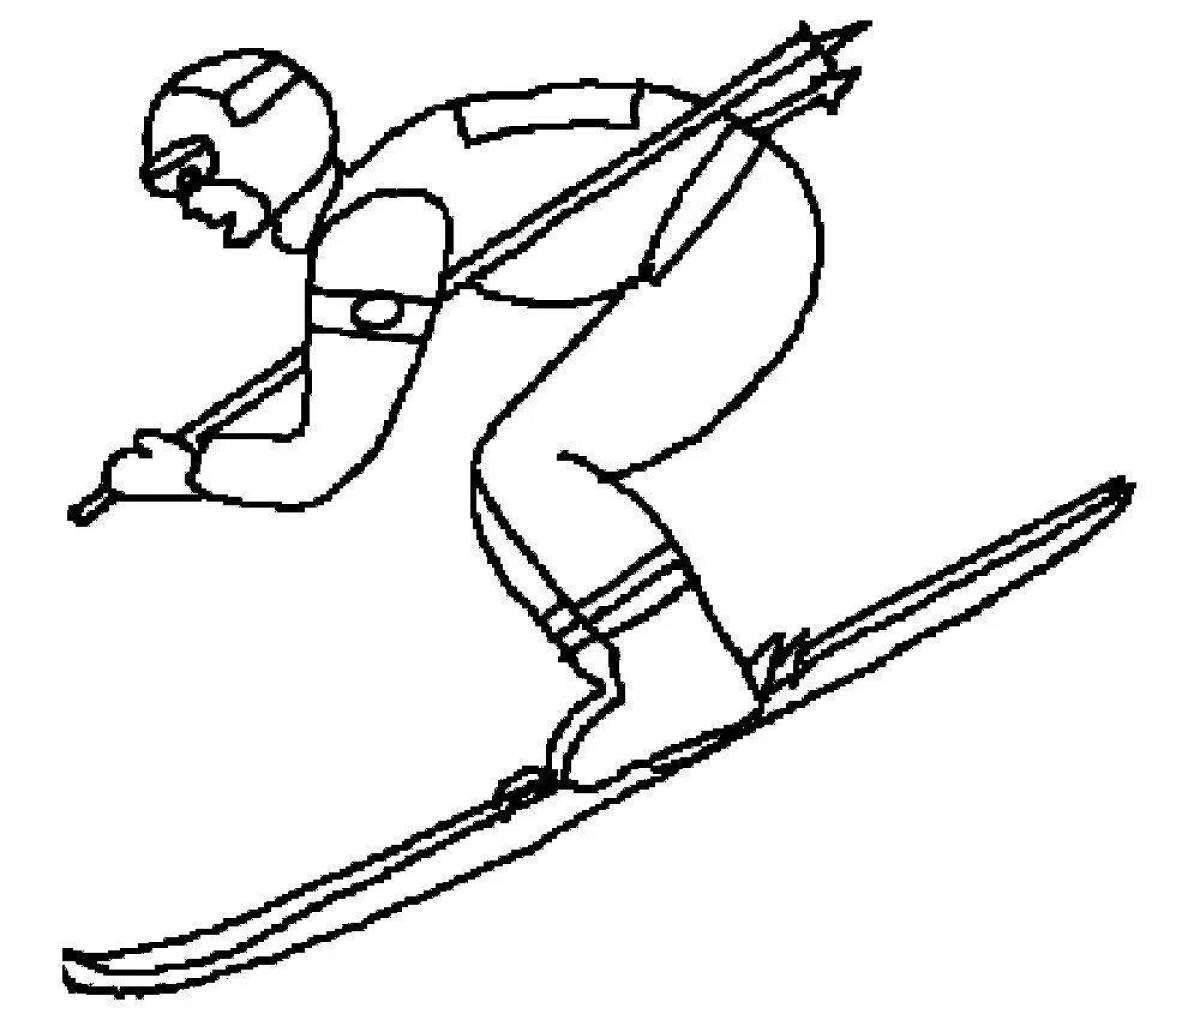 Skier in motion #14